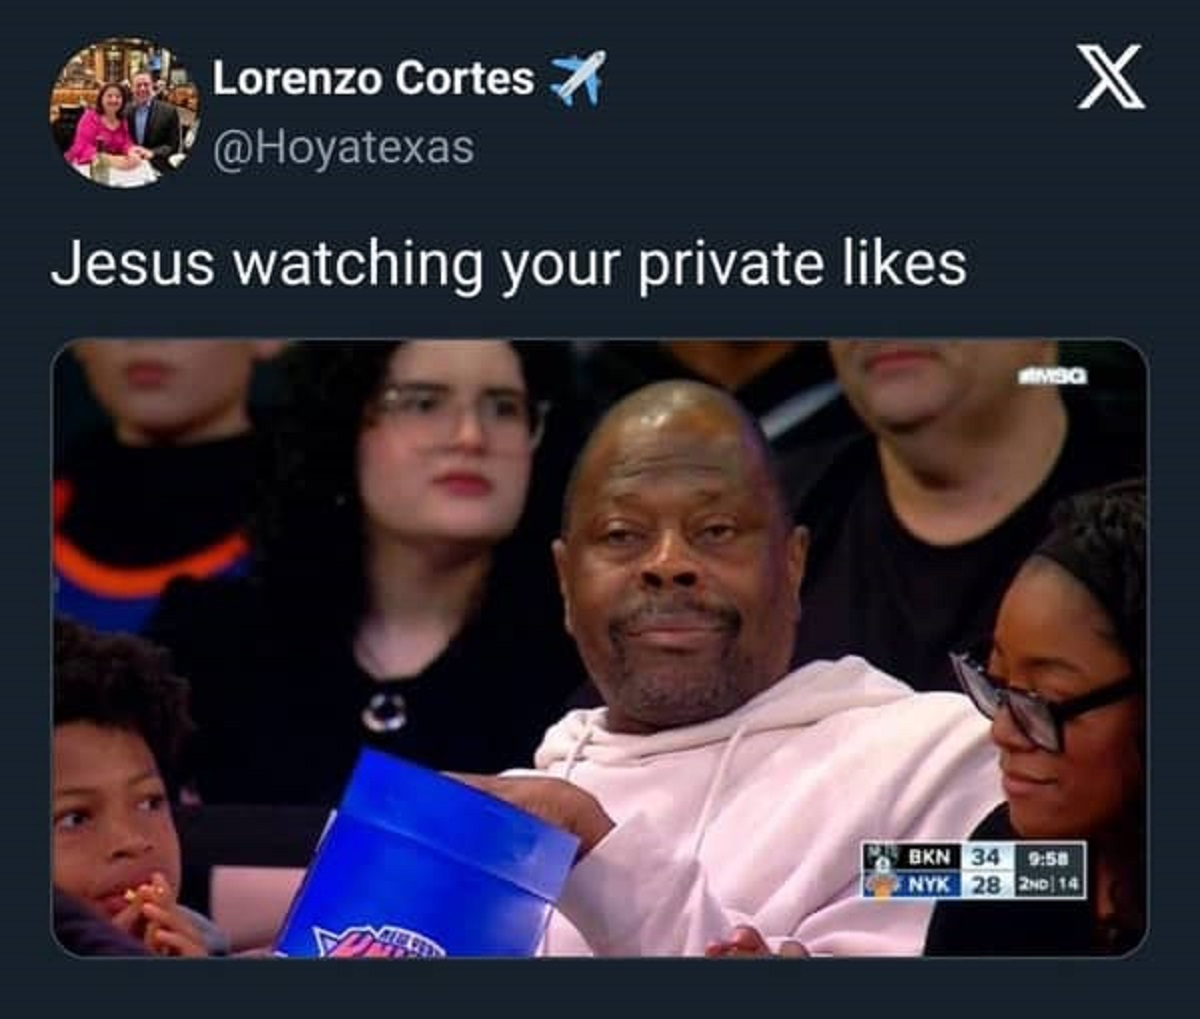 ewing eating popcorn - Lorenzo Cortes Jesus watching your private Bkn 34 Nyk 28 2ND 14 X